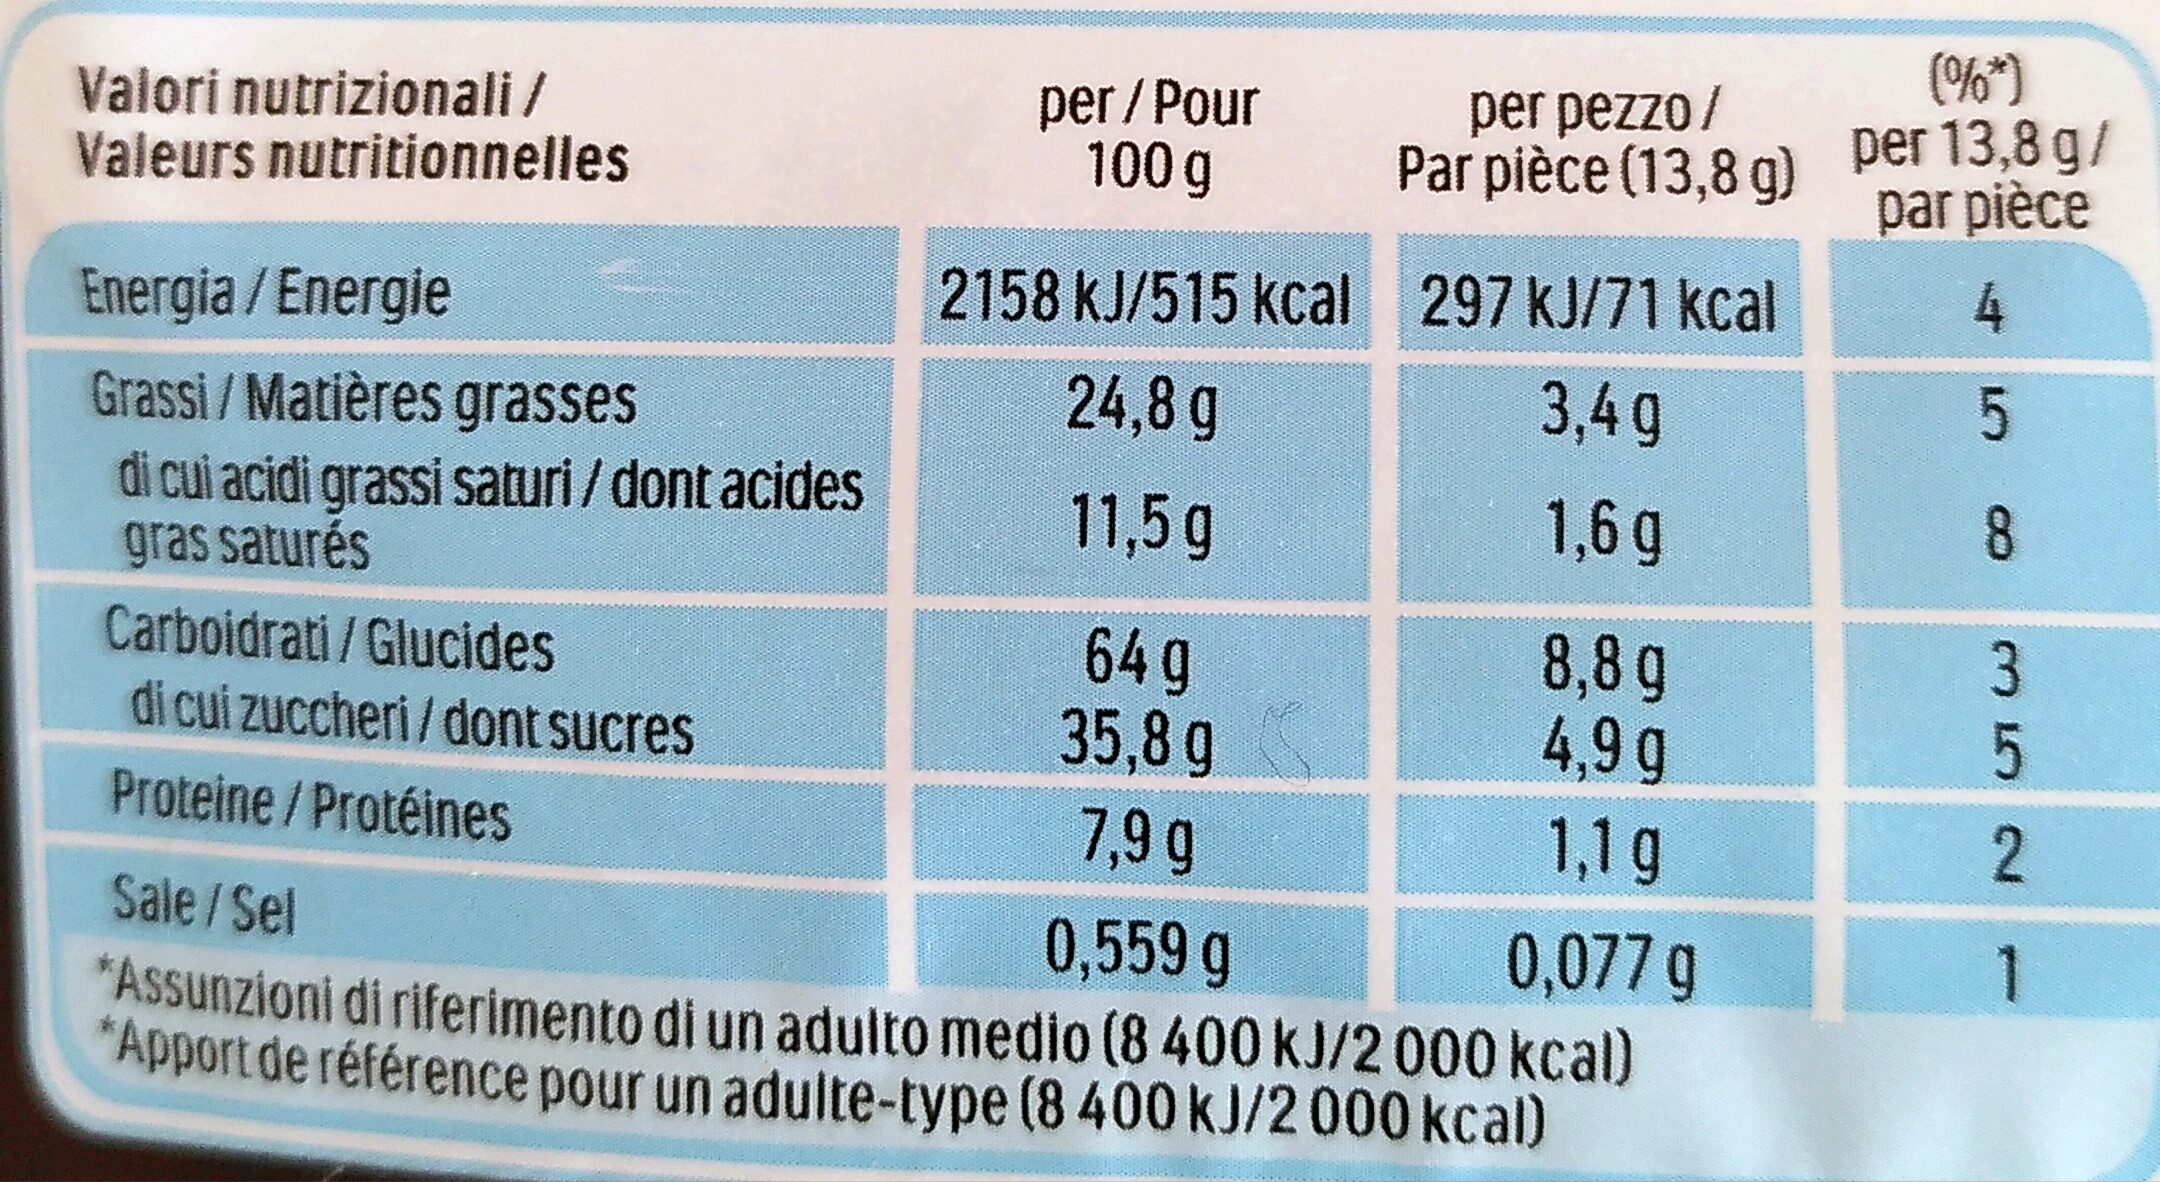 Ferrero- Nutella Biscuits Resealable Bag, 304g (10.7oz) - Tableau nutritionnel